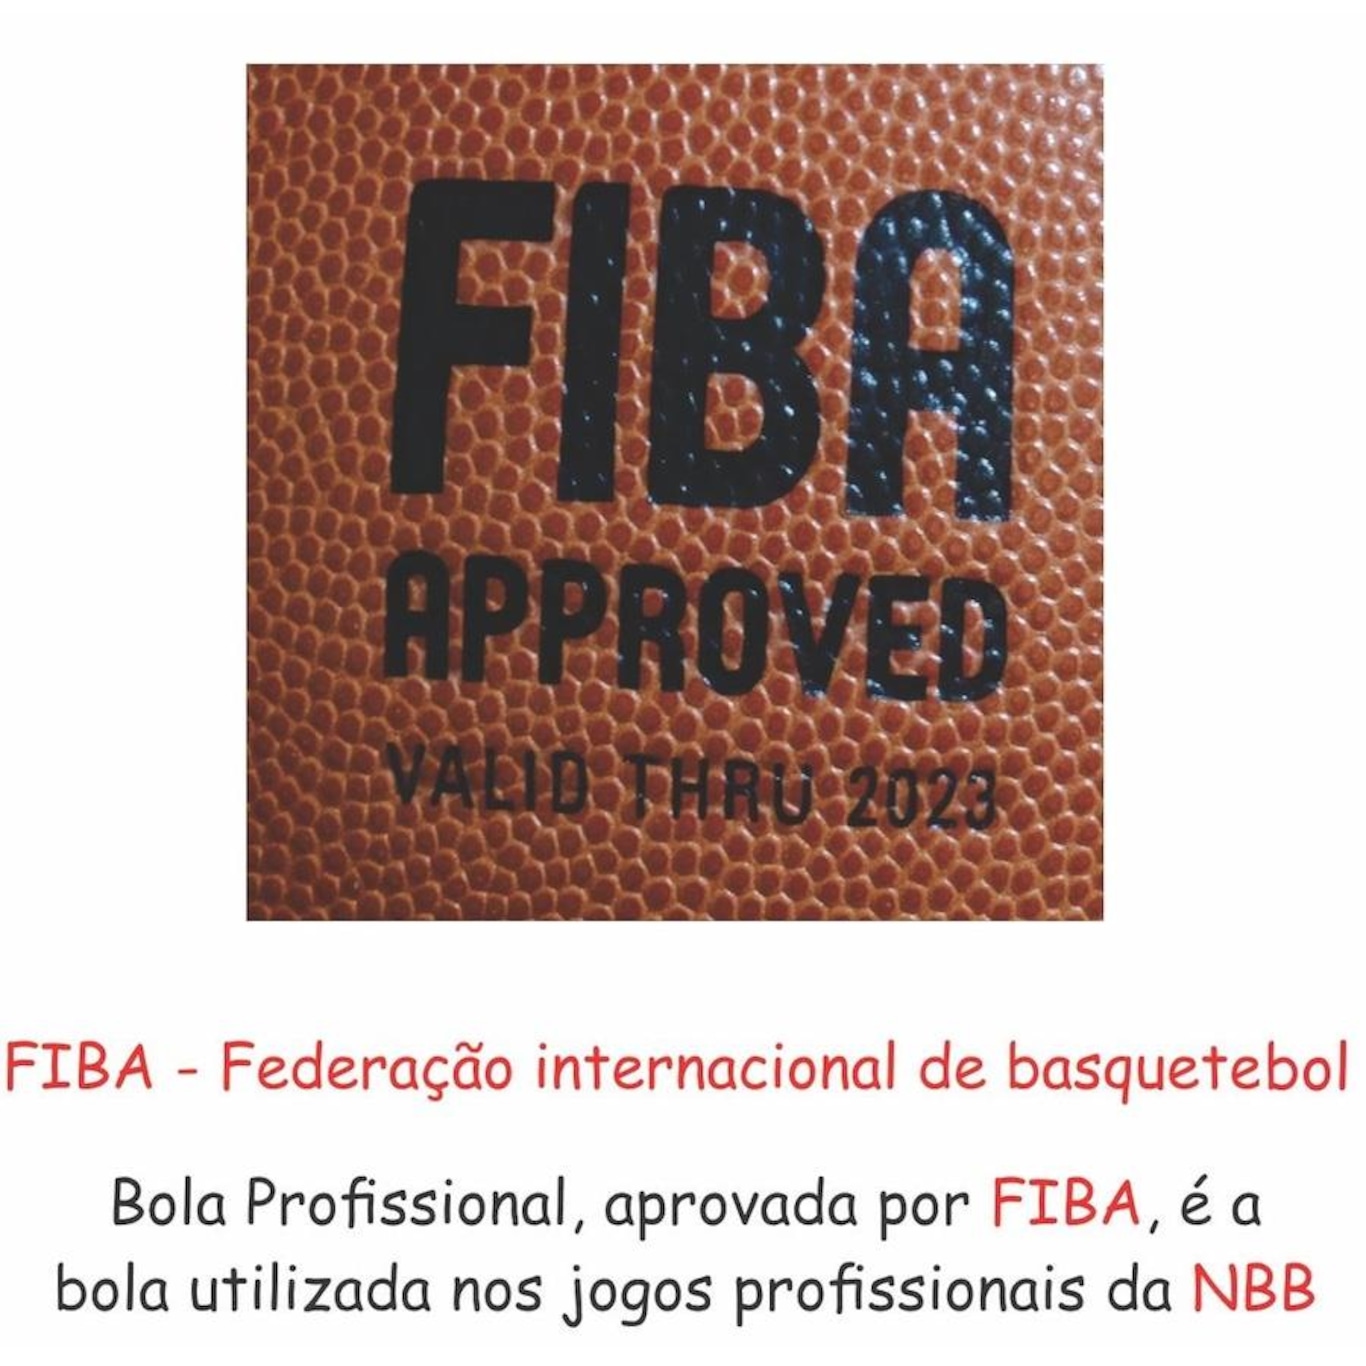 Bola De Basquete Penalty Crossover Pró 7.8 Original Nbb Fiba - R$ 469,9